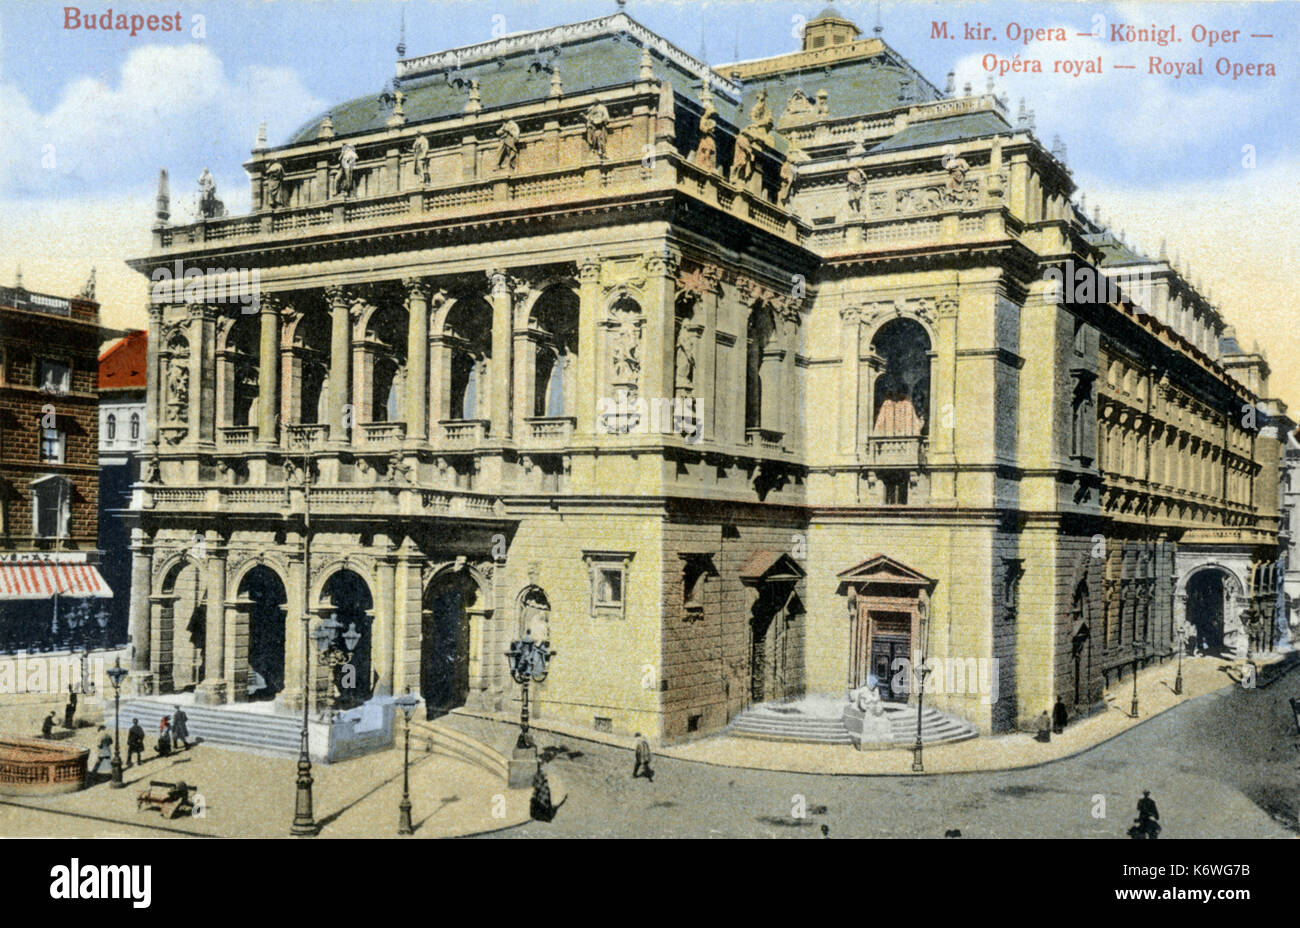 BUDAPEST - ROYAL OPERA HOUSE - Anfang des 20. Jahrhunderts außen Stockfoto